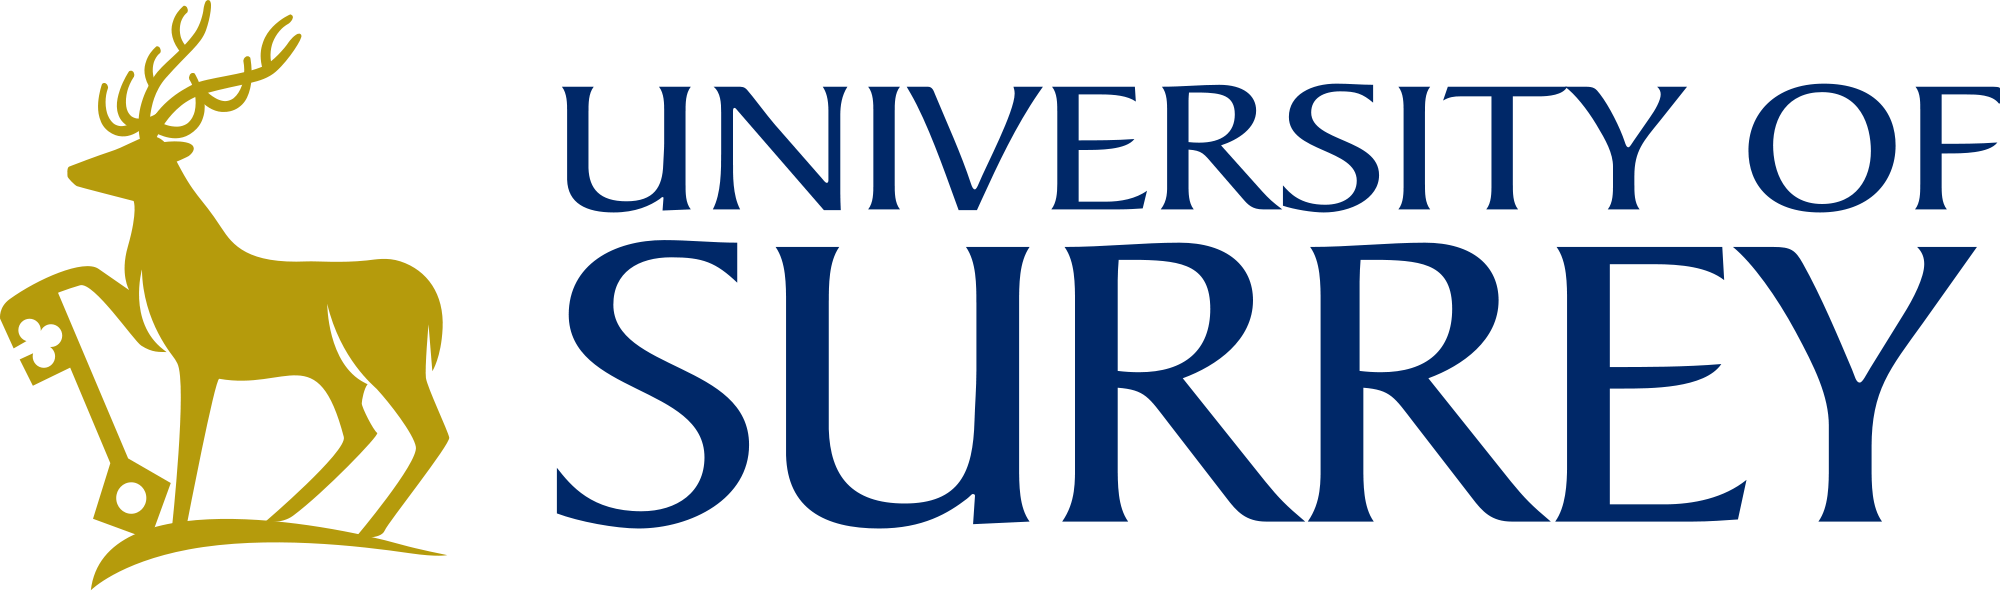 2000px-university_of_surrey_logo